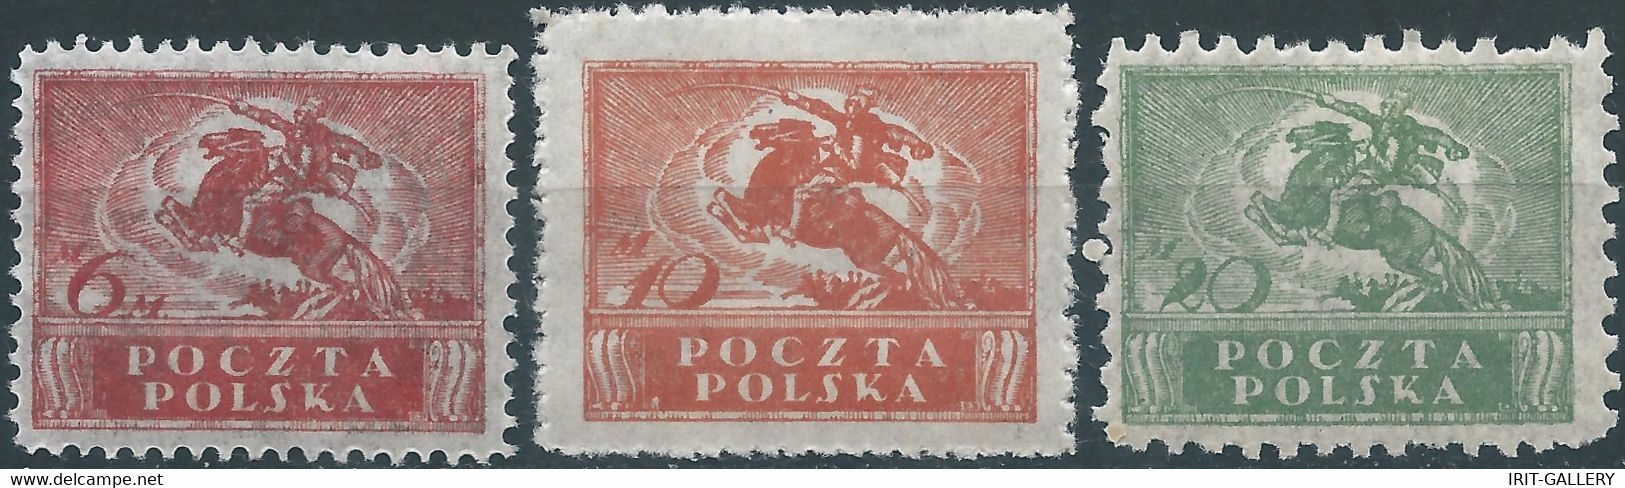 POLONIA-POLAND-POLSKA,1919 South And North Poland Issues,Mint - Ongebruikt